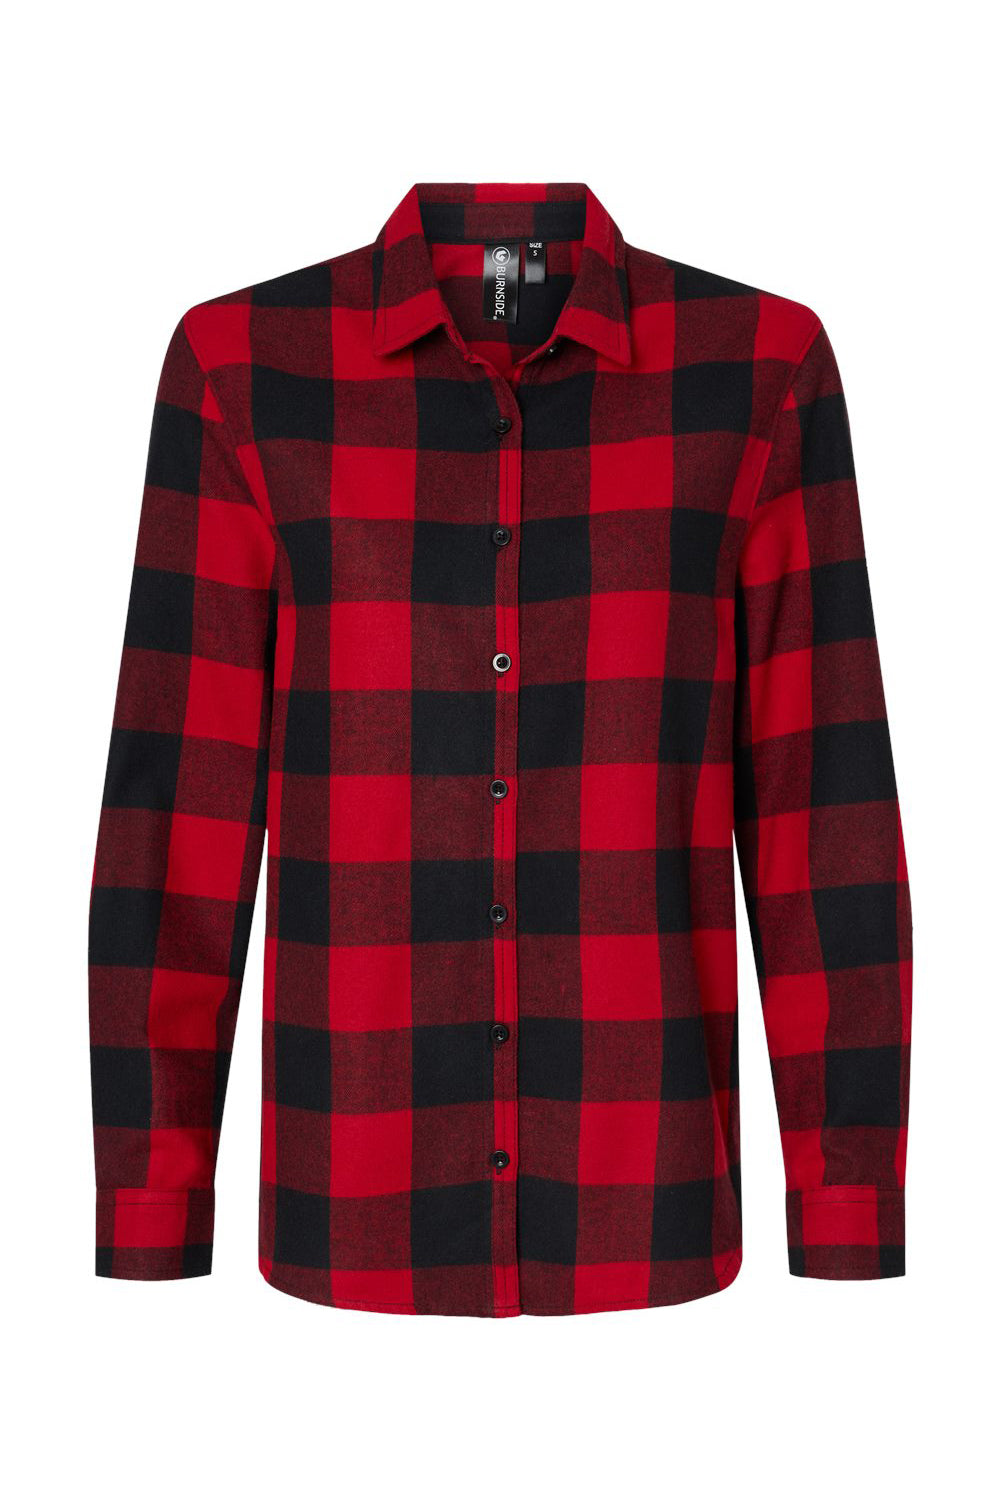 Burnside 5215 Womens Boyfriend Flannel Long Sleeve Button Down Shirt Red/Black Buffalo Flat Front